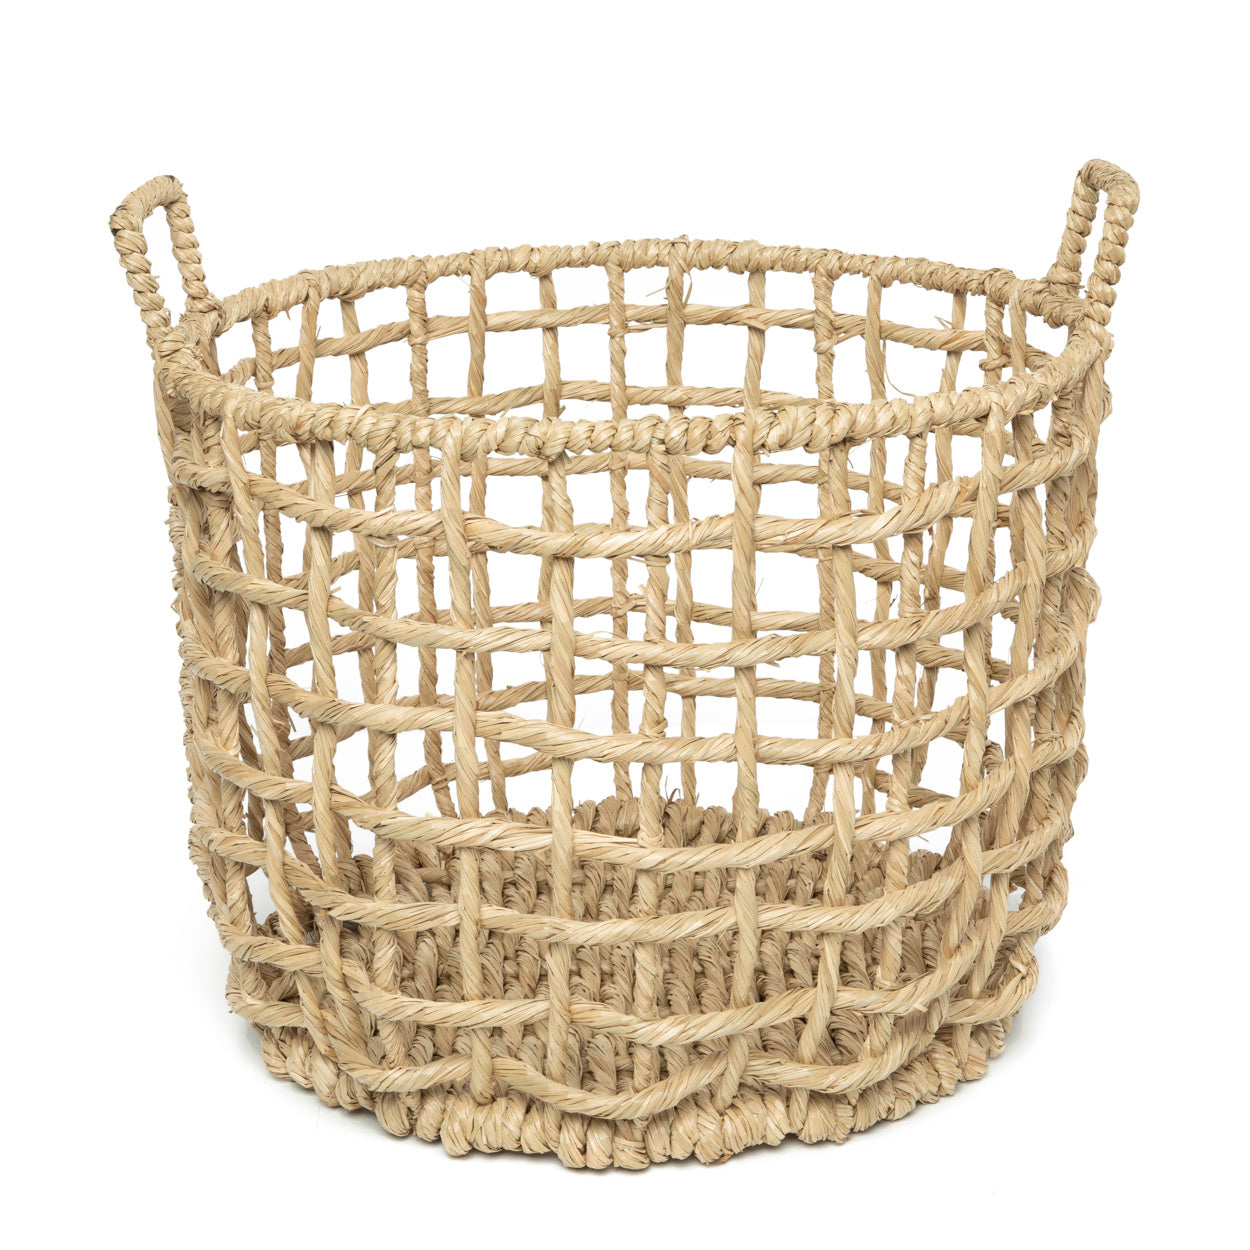 THE CUA DAI Baskets Set of 3 single basket